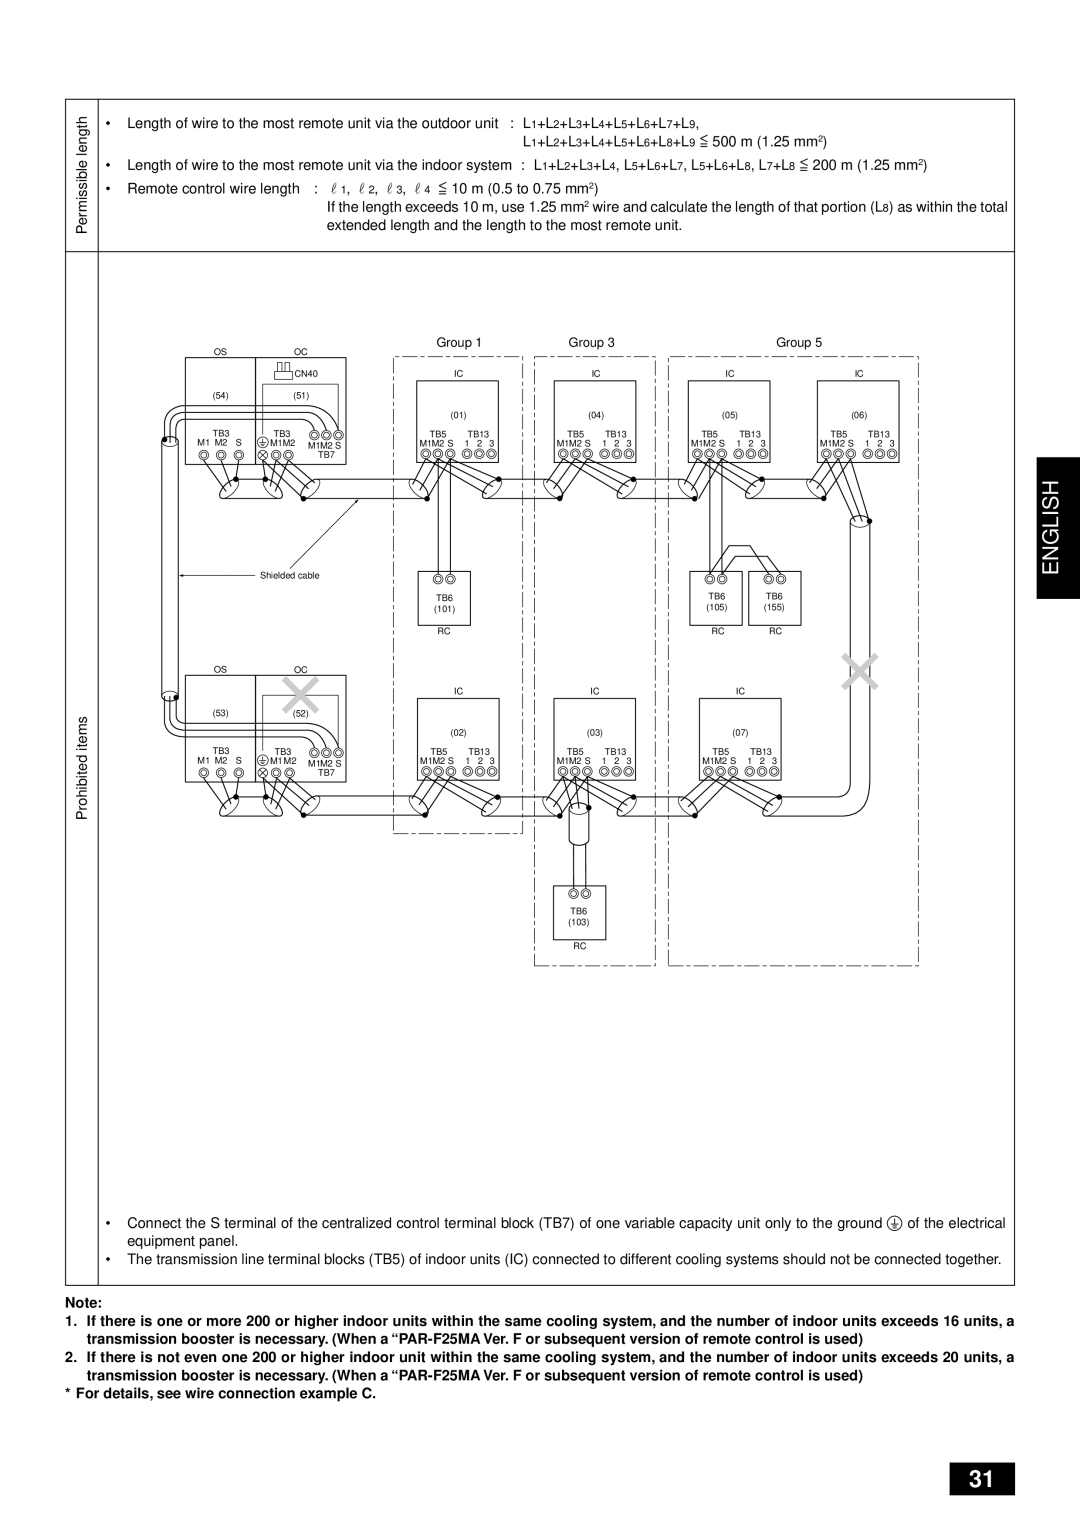 Mitsubishi Electronics PUHY-YMC installation manual English, length 